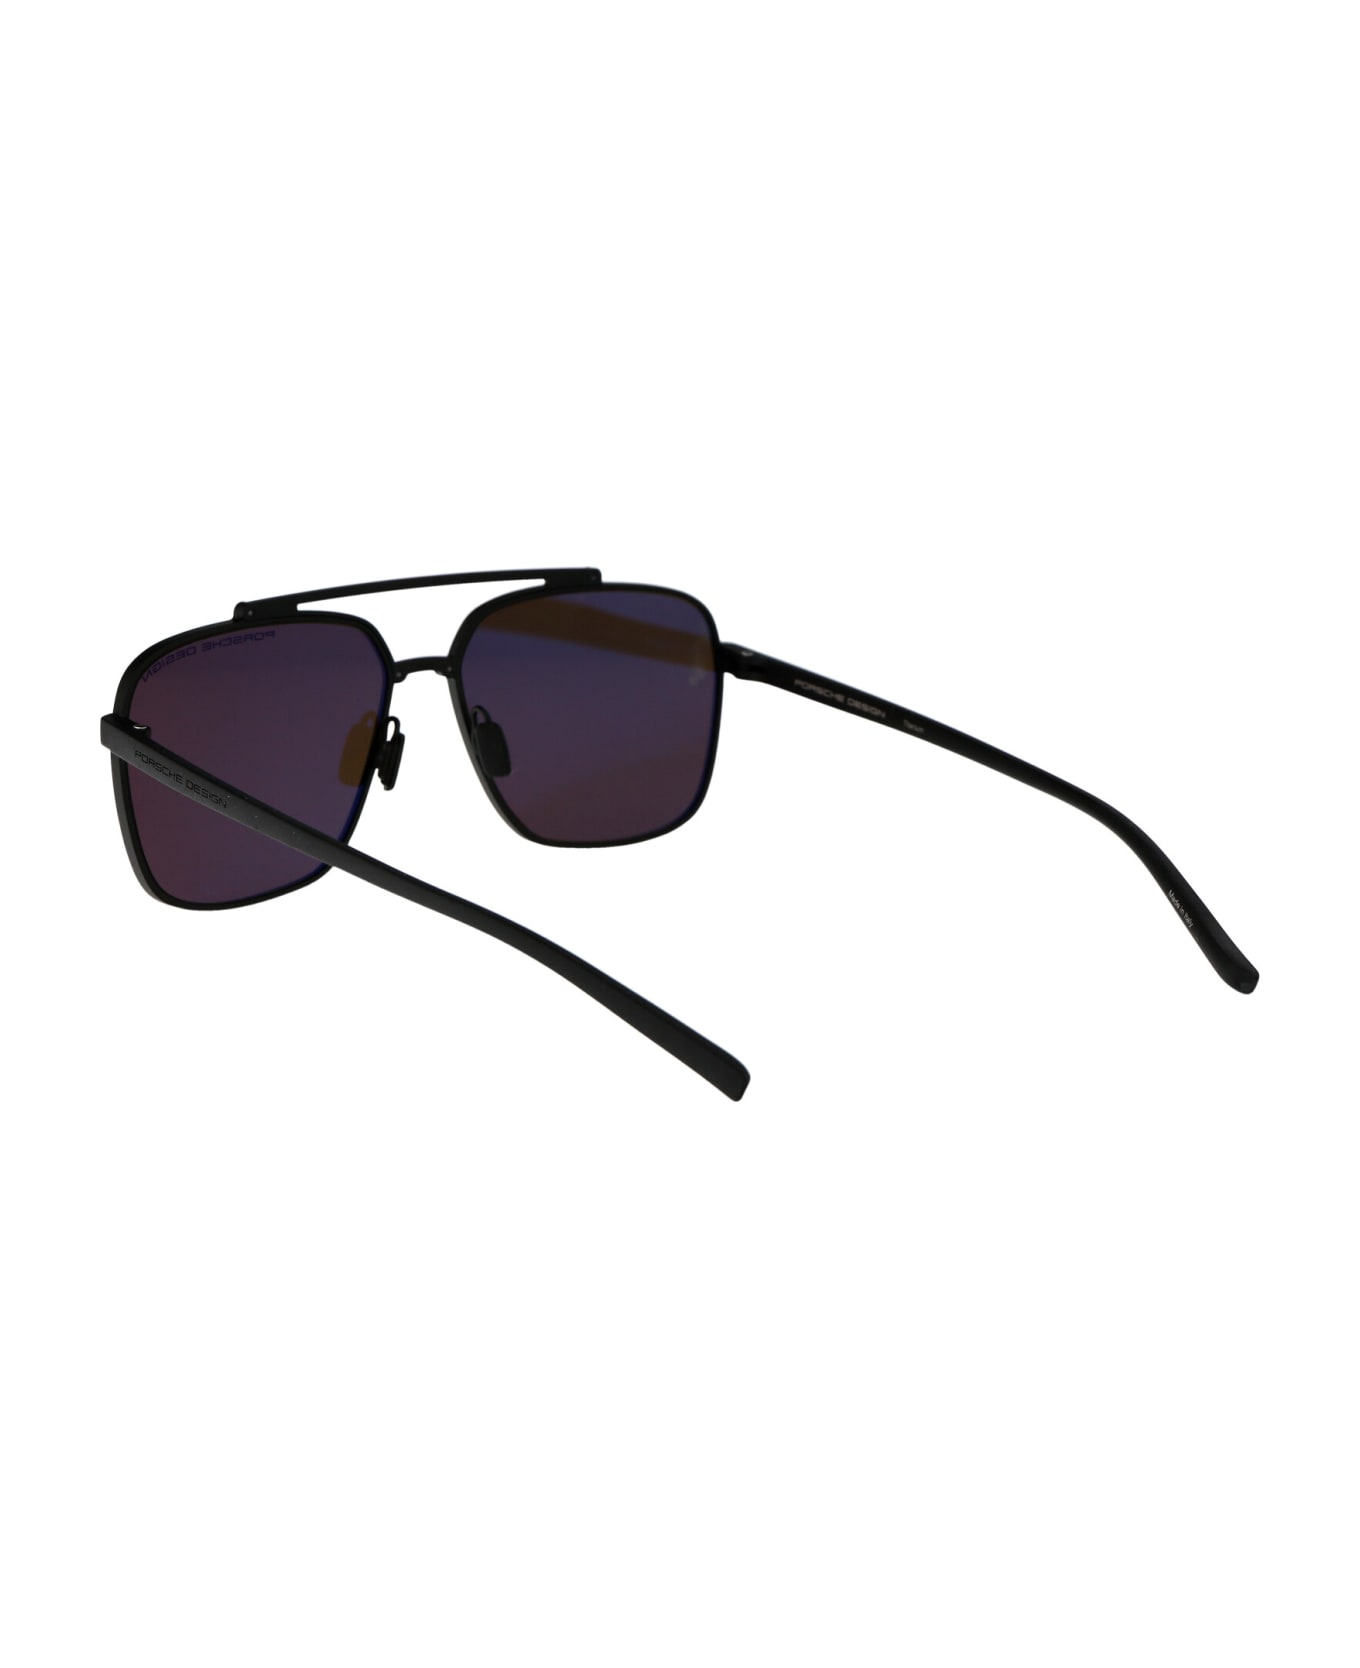 Porsche Design P8937 Sunglasses - A169 BLACK